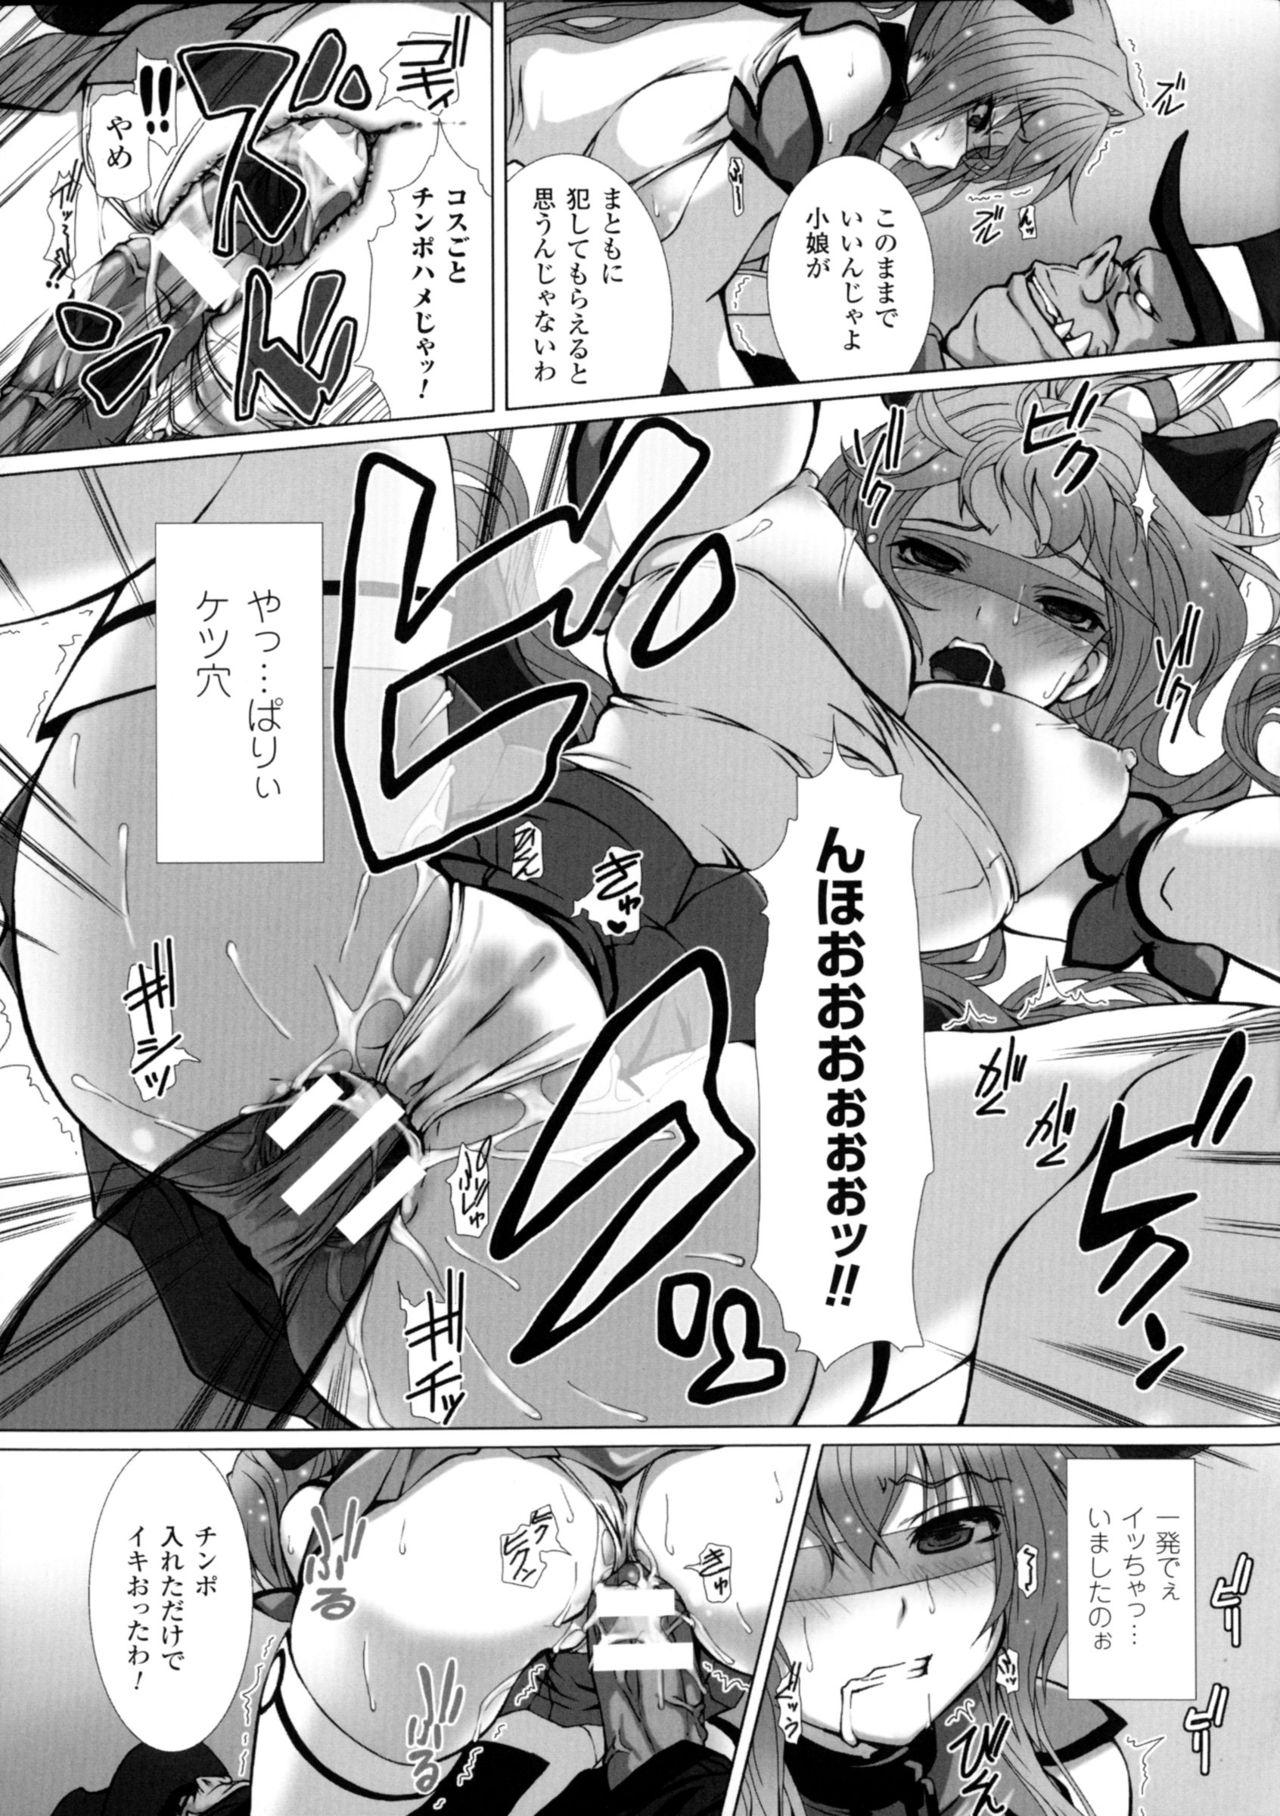 Seigi no Heroine Kangoku File DX Vol. 4 32